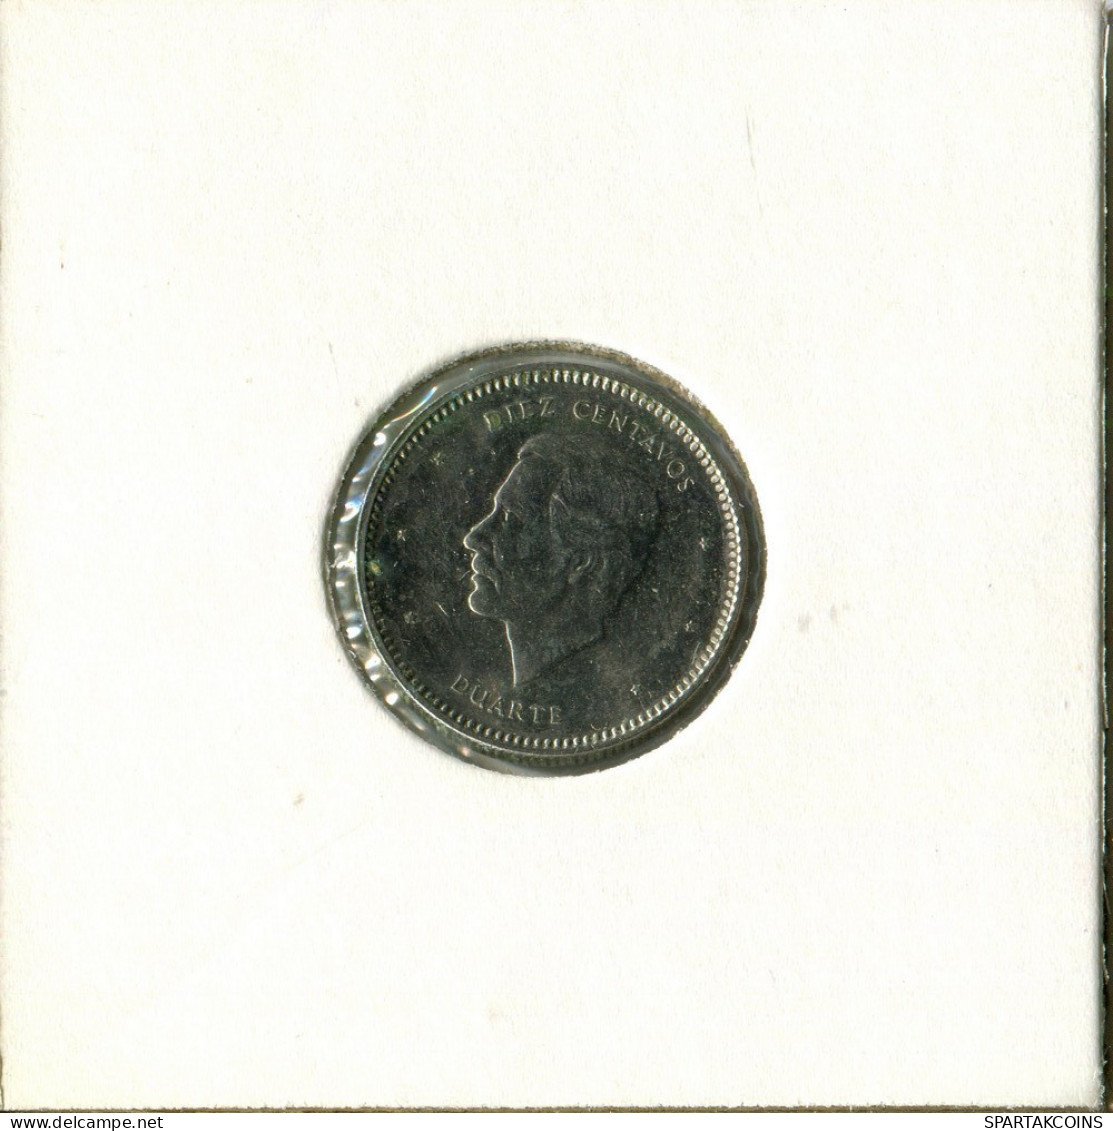 10 CENTAVOS 1986 DOMINICANA Coin #AU787.U - Dominicana